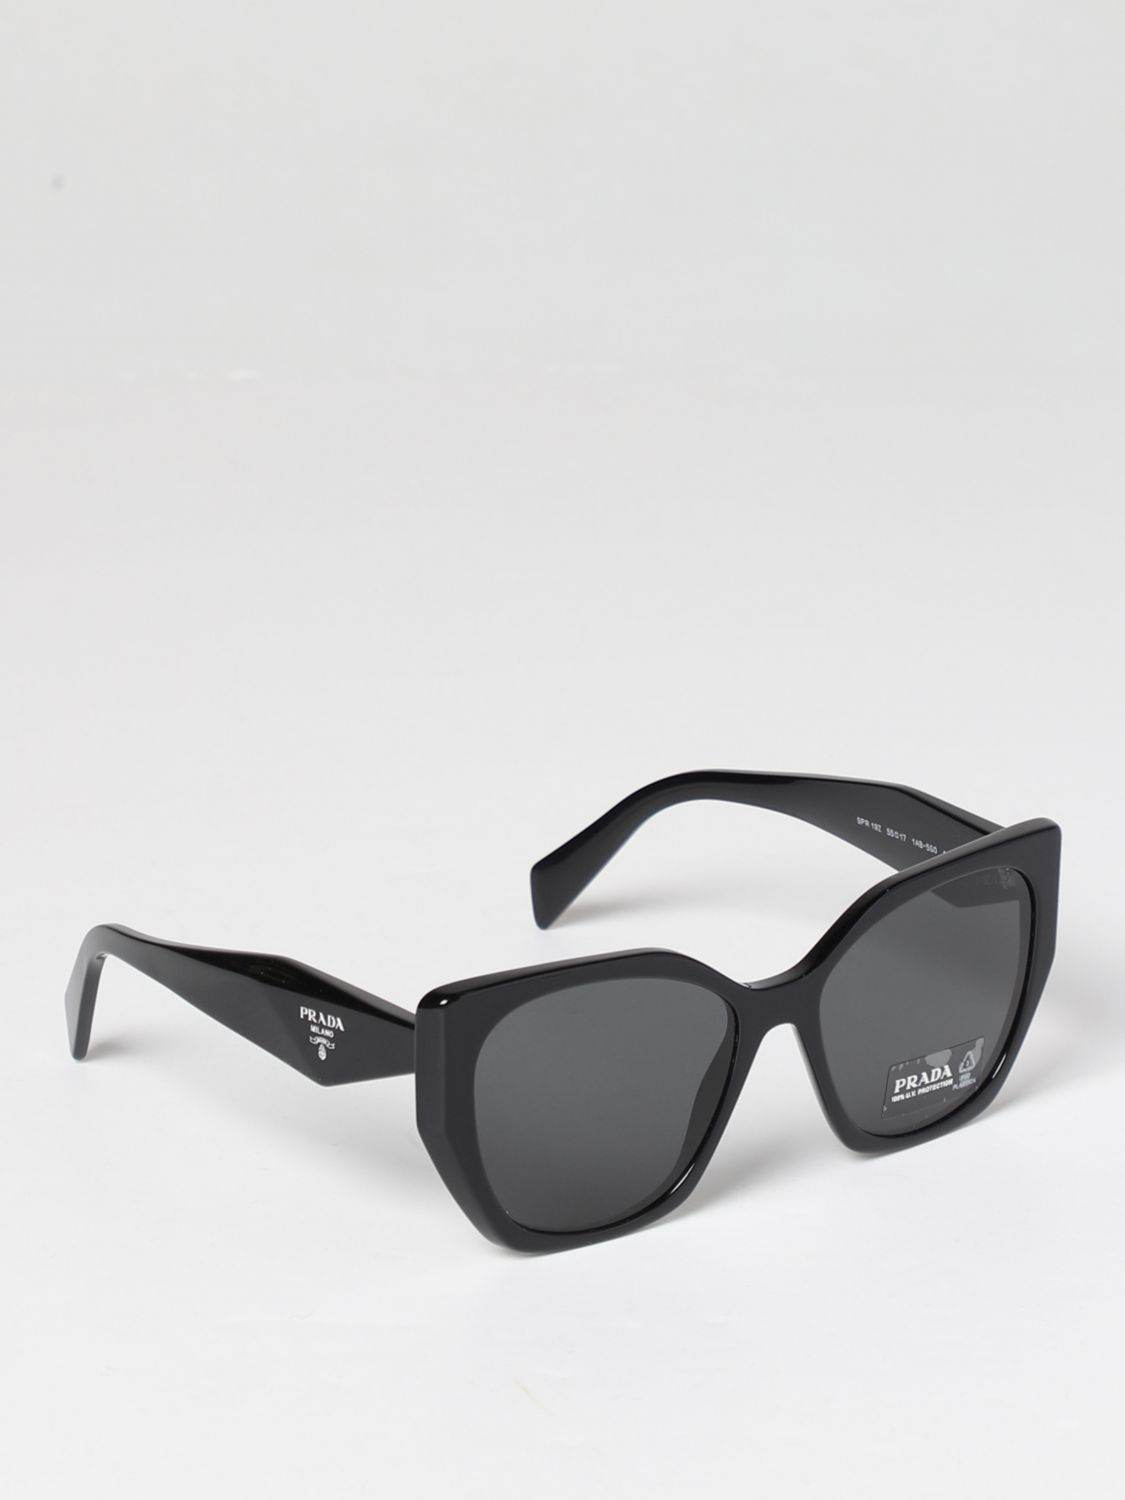 Prada Outlet: sunglasses for woman - Black | Prada sunglasses 19ZS SOLE  online on 